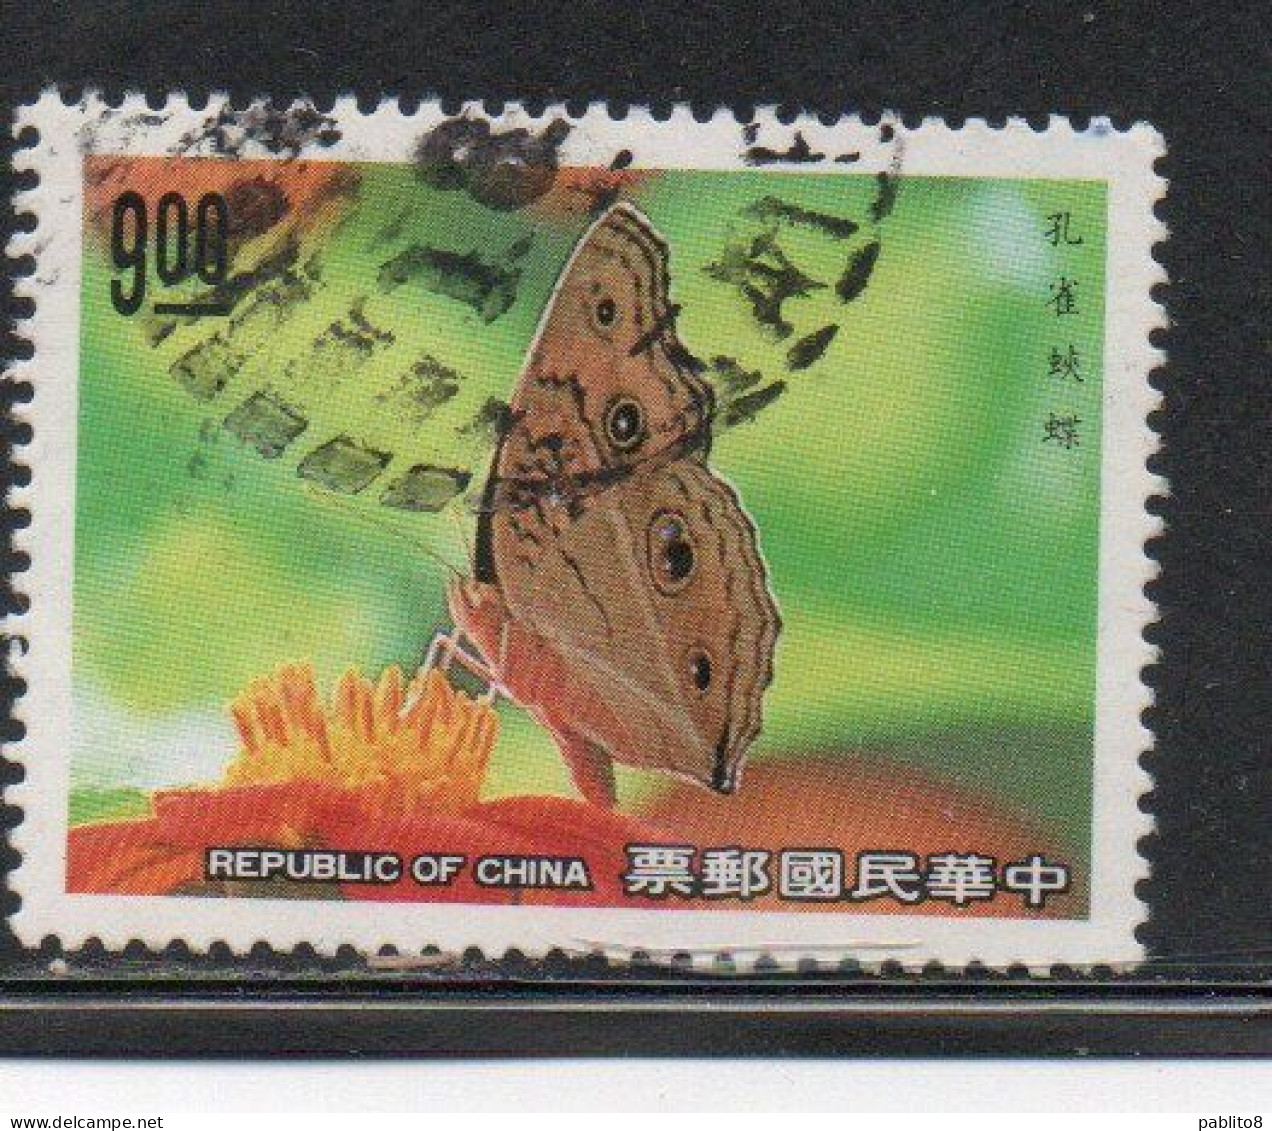 CHINA REPUBLIC CINA TAIWAN FORMOSA 1990 BUTTERFLIES PRECIS ALMANA 9$ USED USATO OBLITERE' - Used Stamps